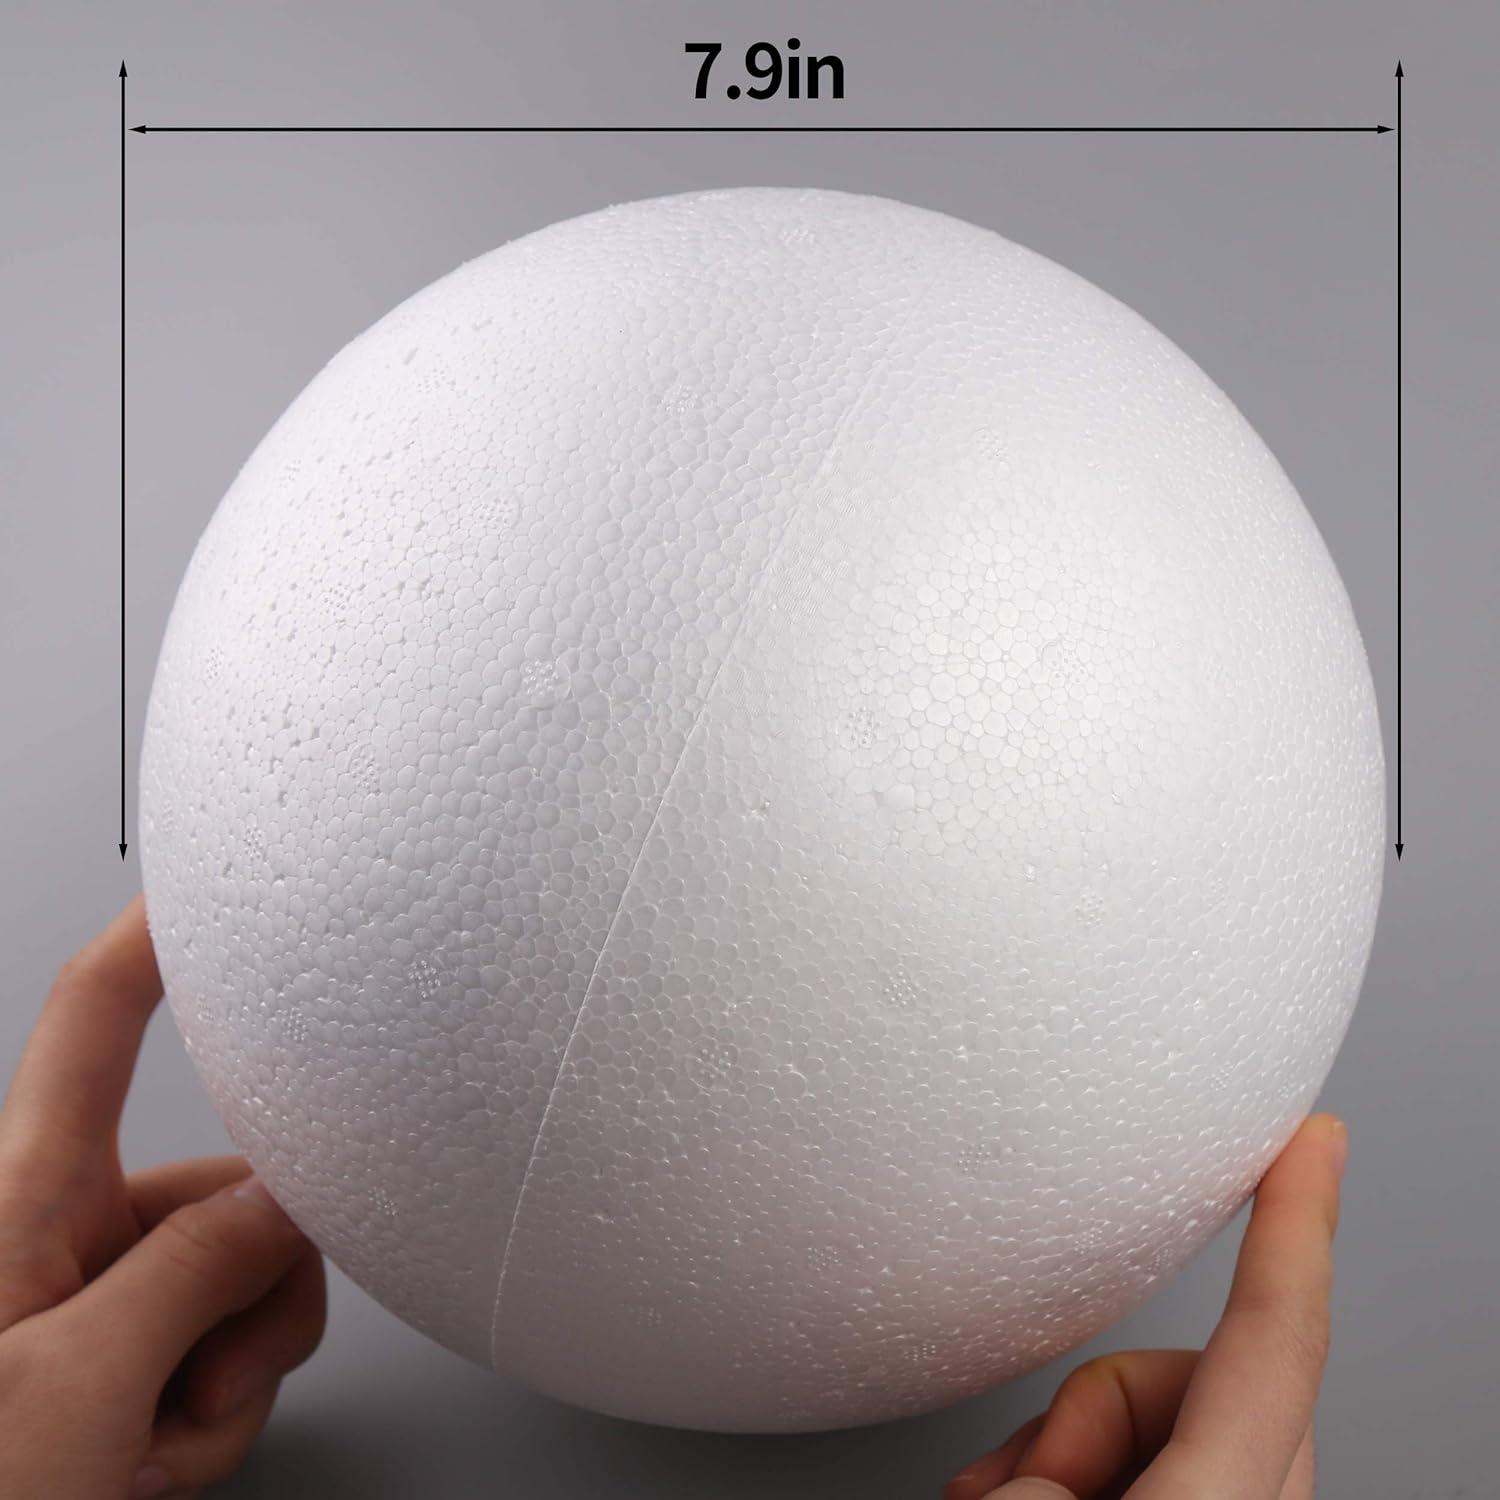 DIYASY 8 Large White Foam Balls 2 Pack Giant Foam Balls Smooth